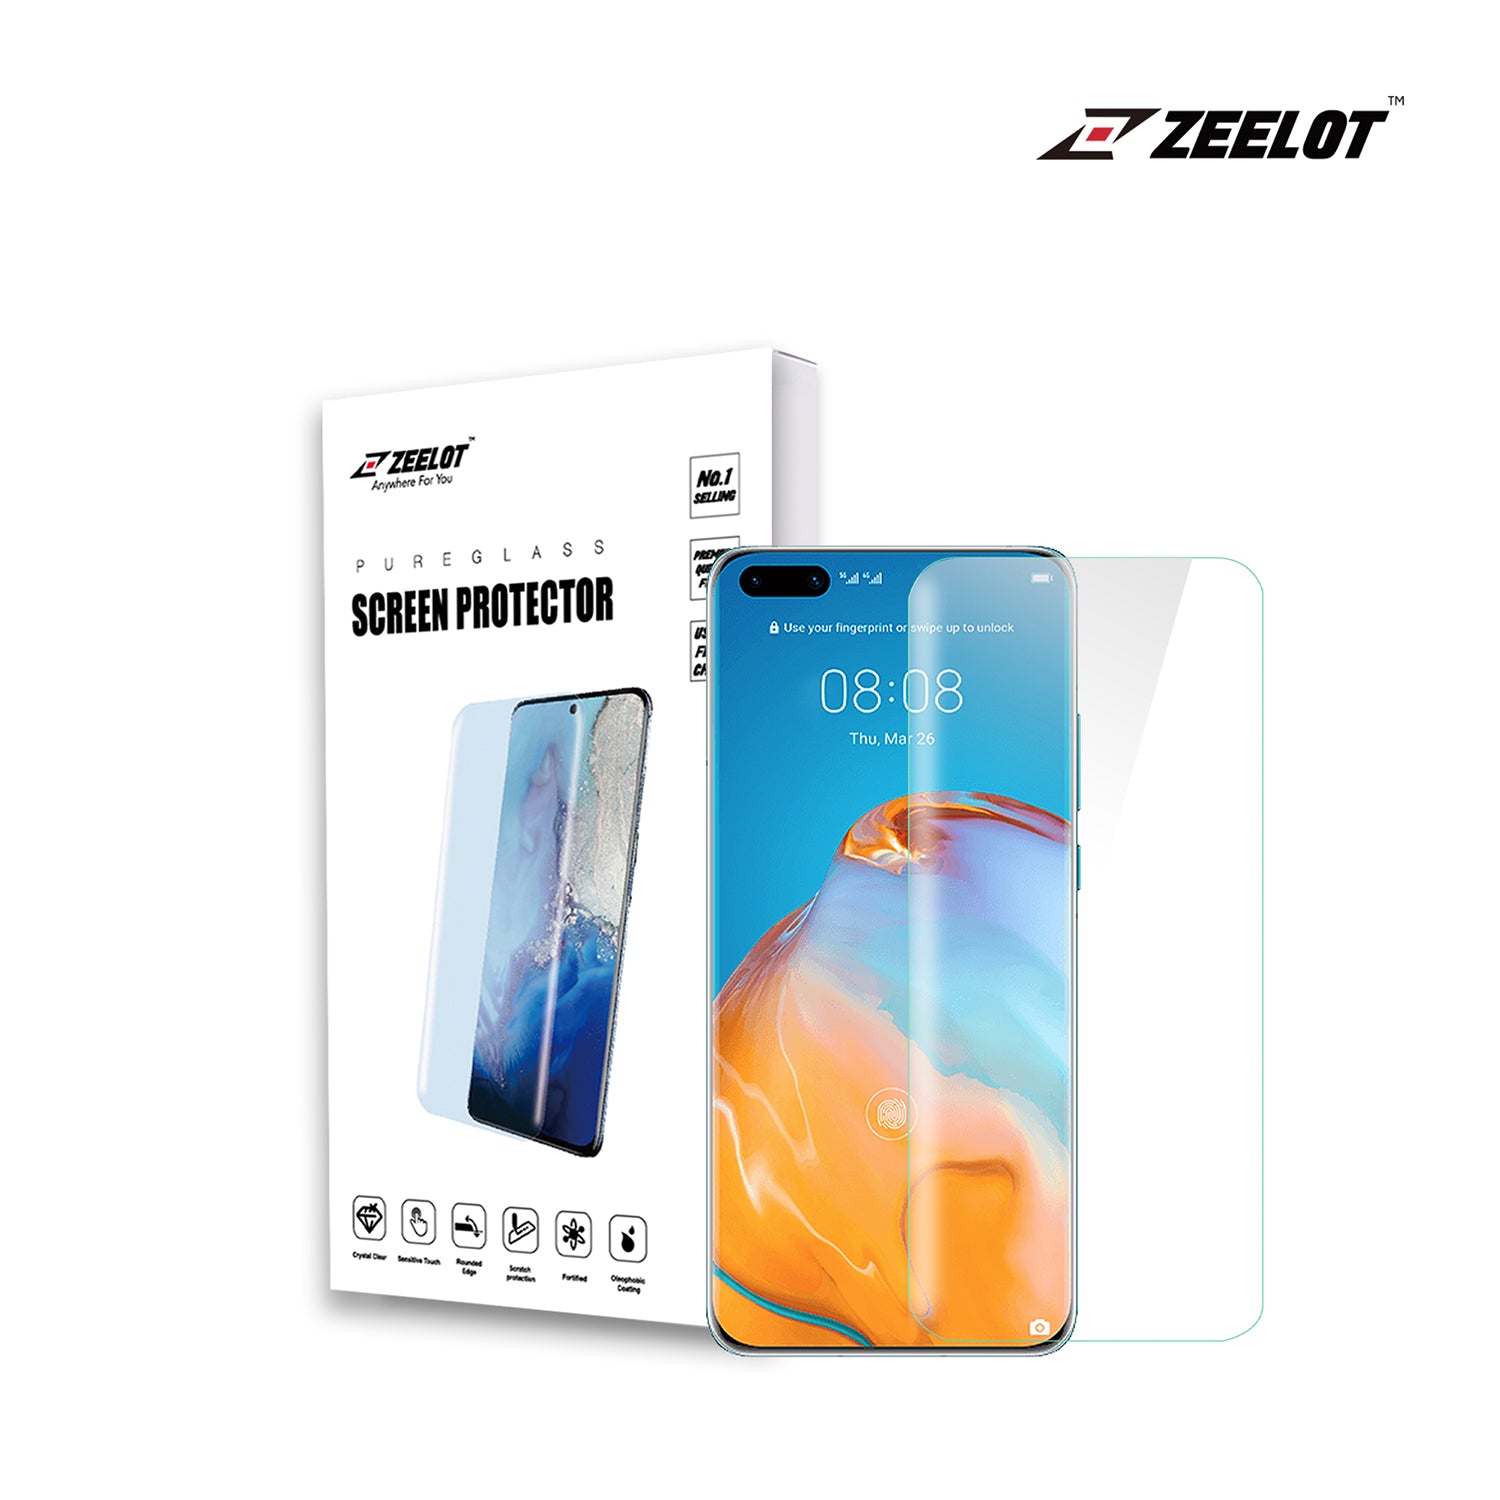 ZEELOT PureGlass 3D LOCA Tempered Glass Screen Protector for Huawei P40 Pro (2020), Clear P40Pro Loca ZEELOT Clear 